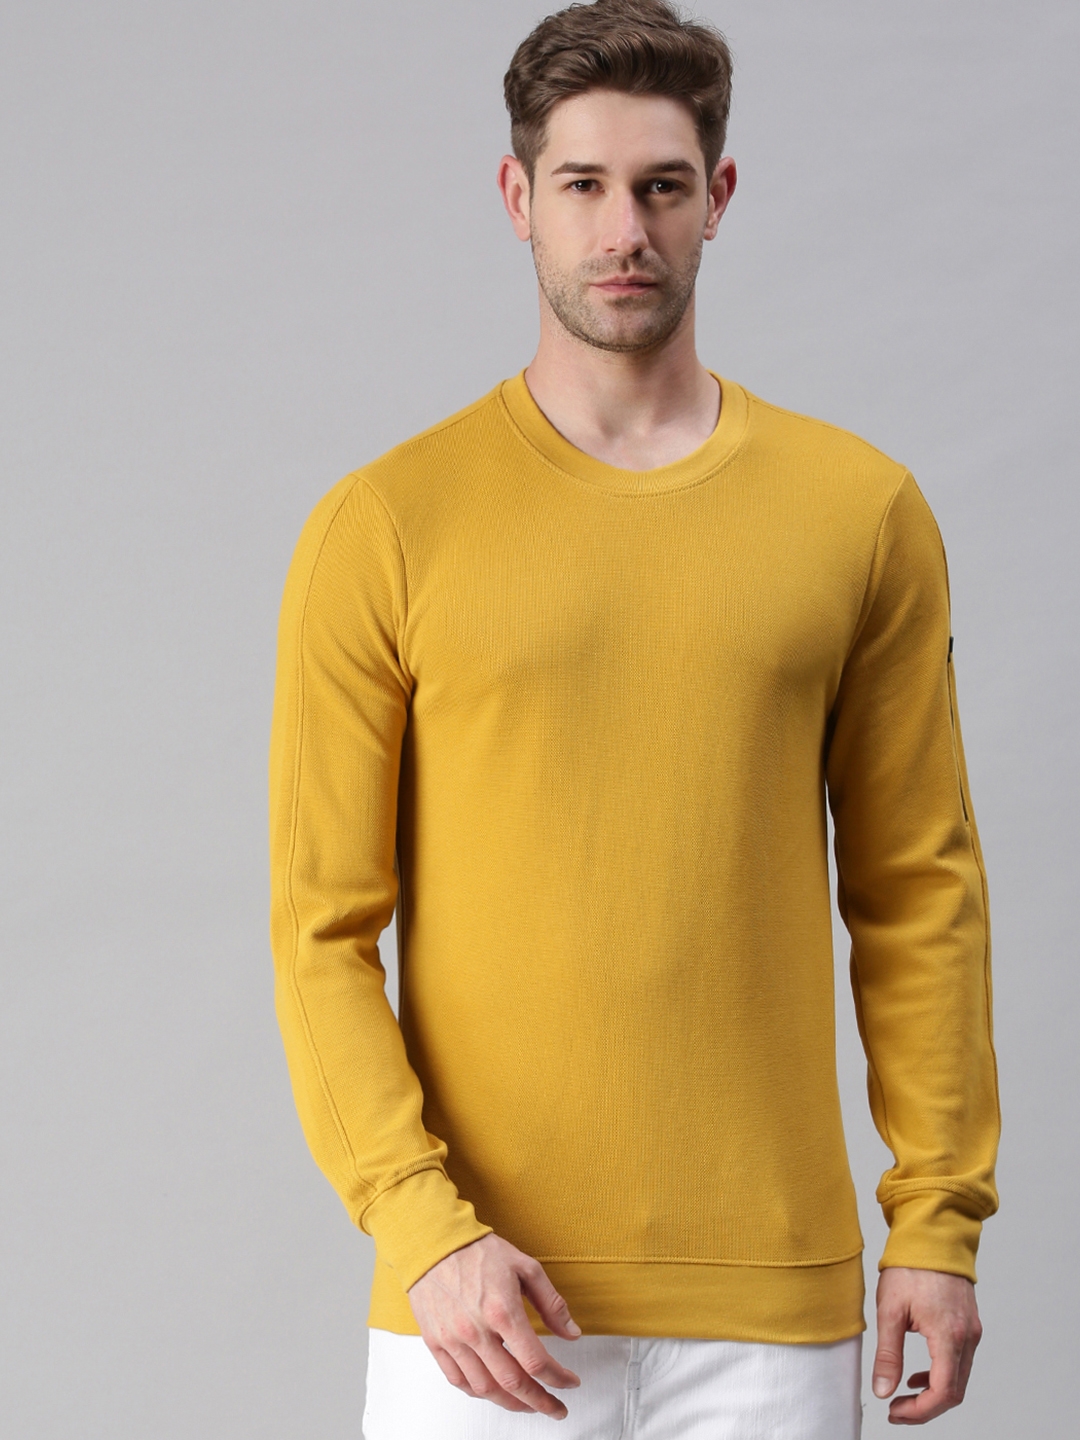 Men's Yellow Cotton Blend Solid Sweatshirts